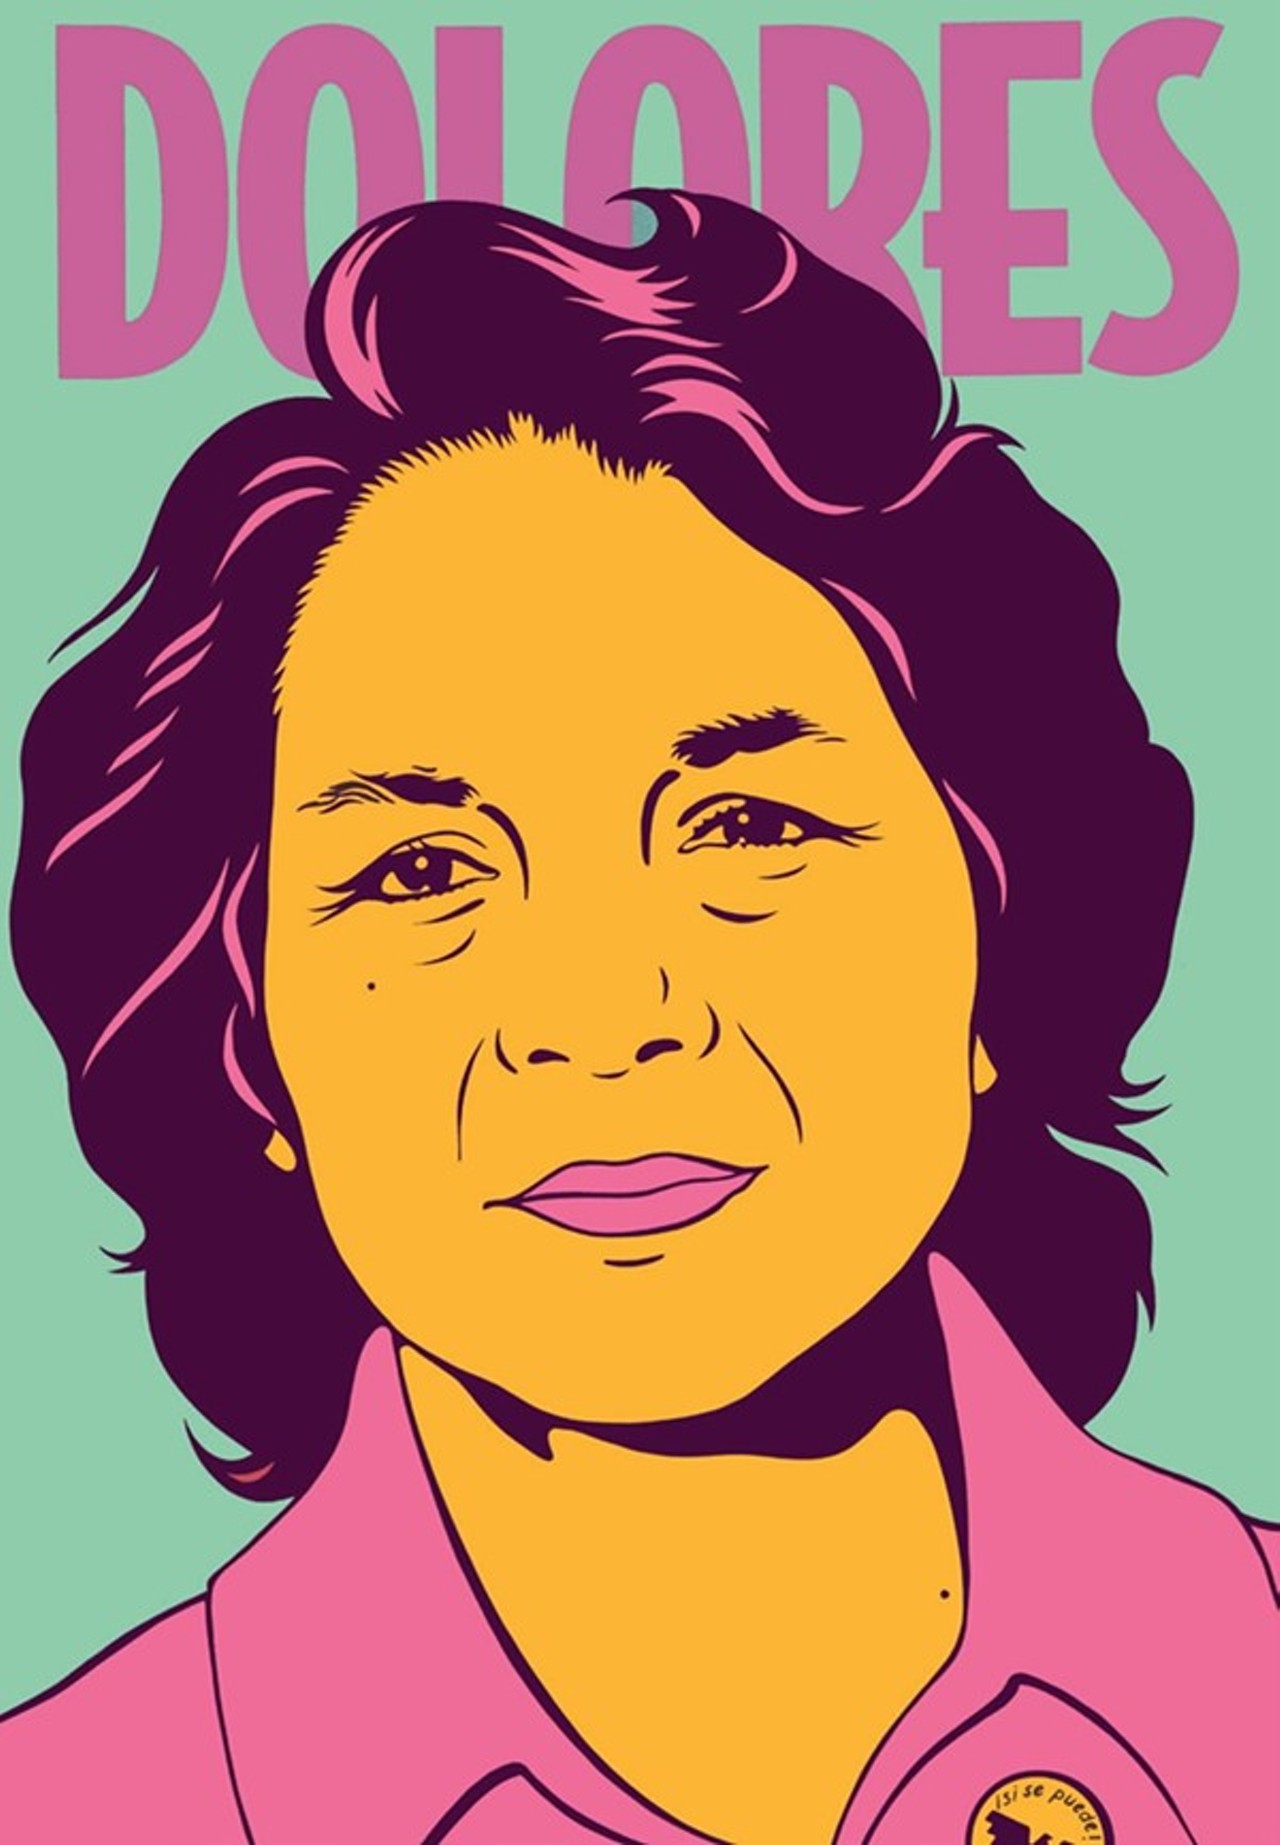 Dolores Huerta at Palo Alto College
Thu., March 23, 11 a.m.-12:30 p.m. & 6-7 p.m., Free